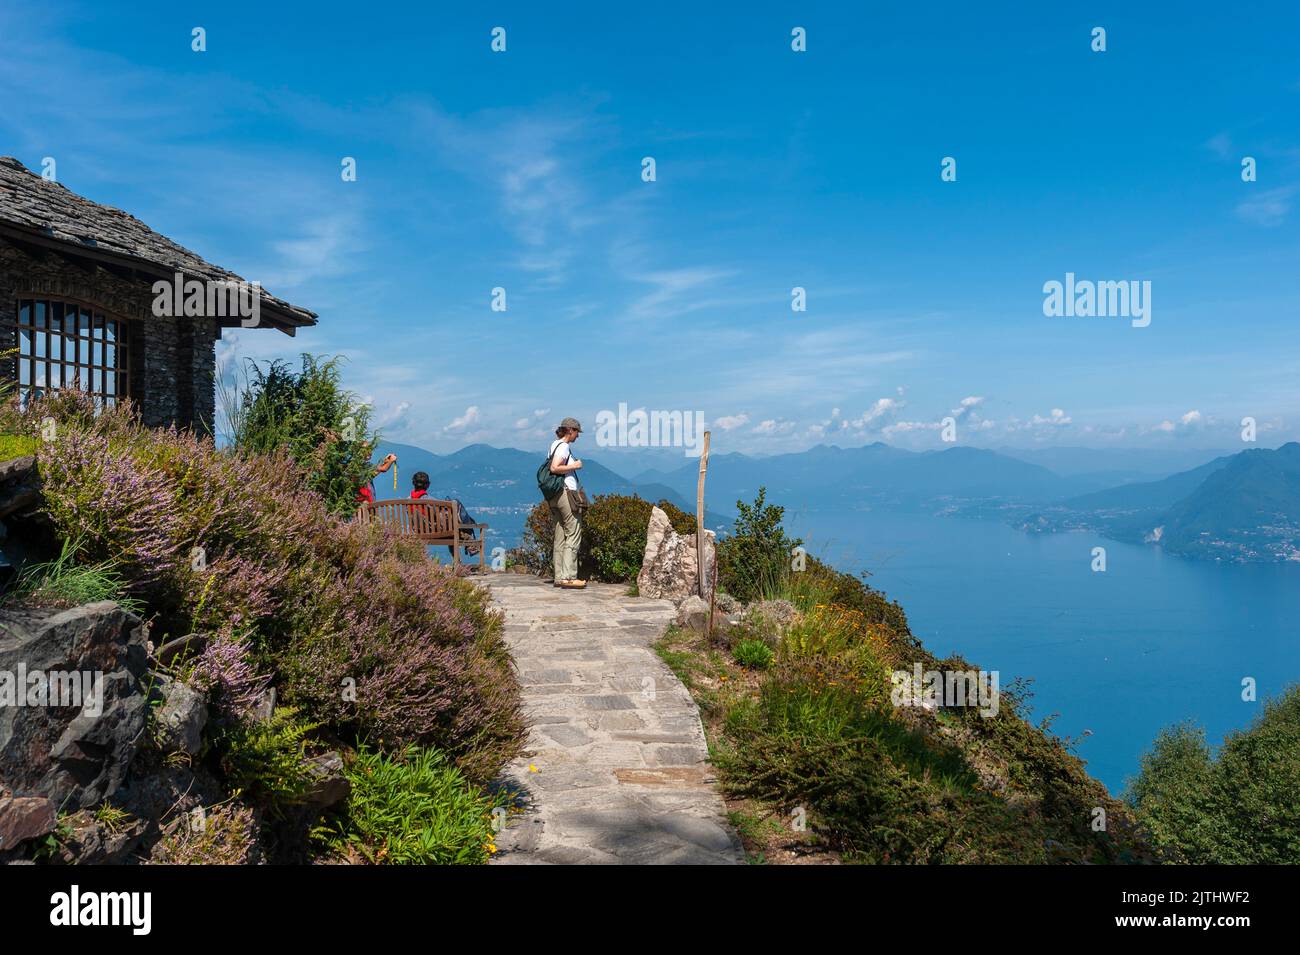 Tourists in the Giardino Botanico Alpinia park overlooking Lake Maggiore, Stresa, Piedmont, Italy, Europe Stock Photo